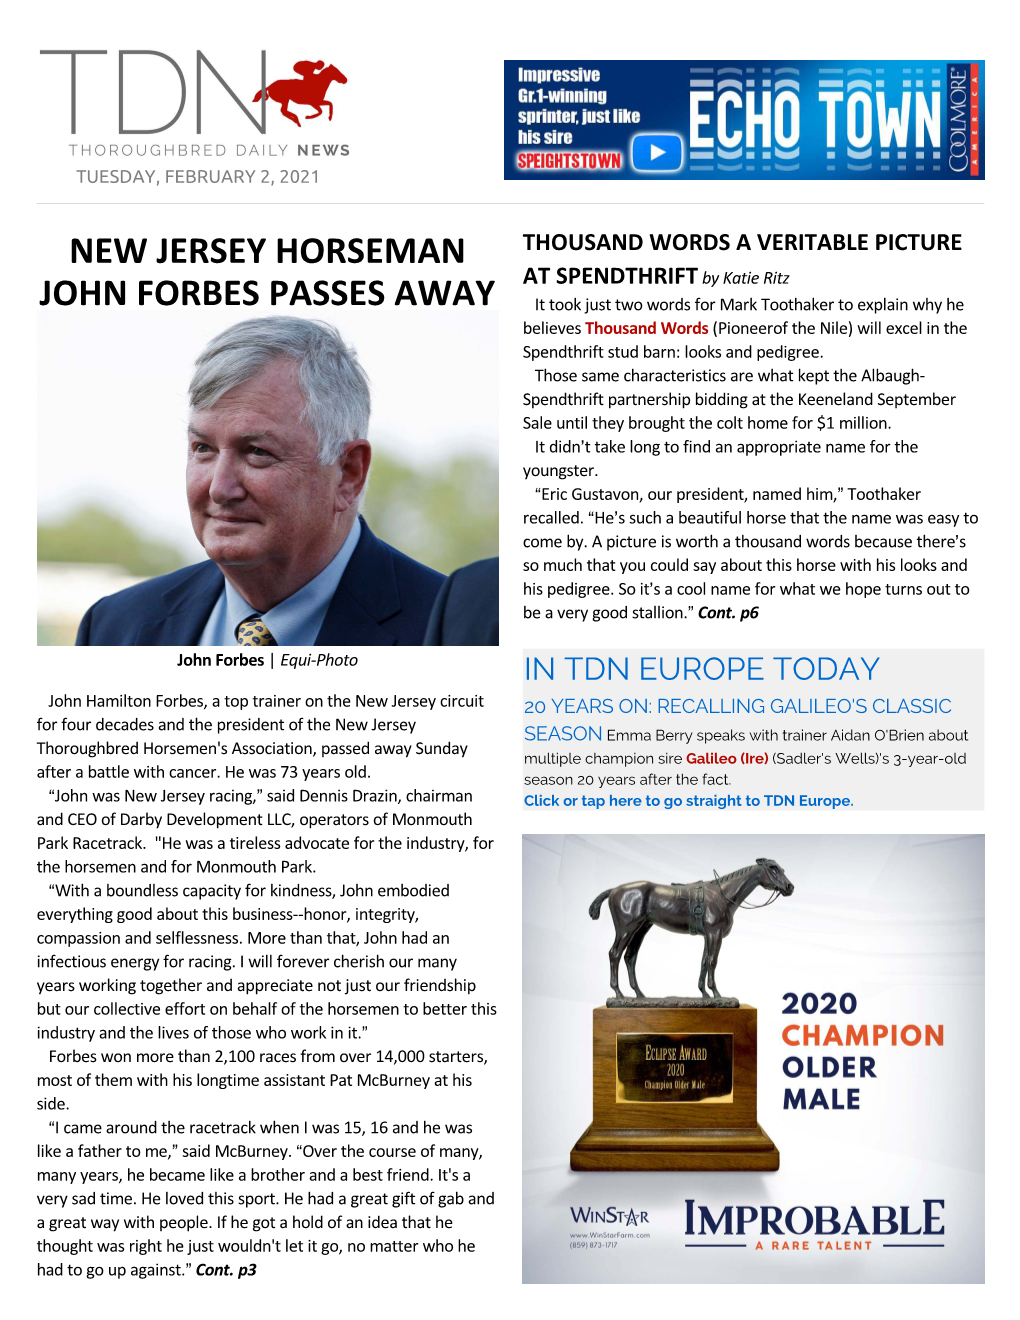 New Jersey Horseman John Forbes Passes Away